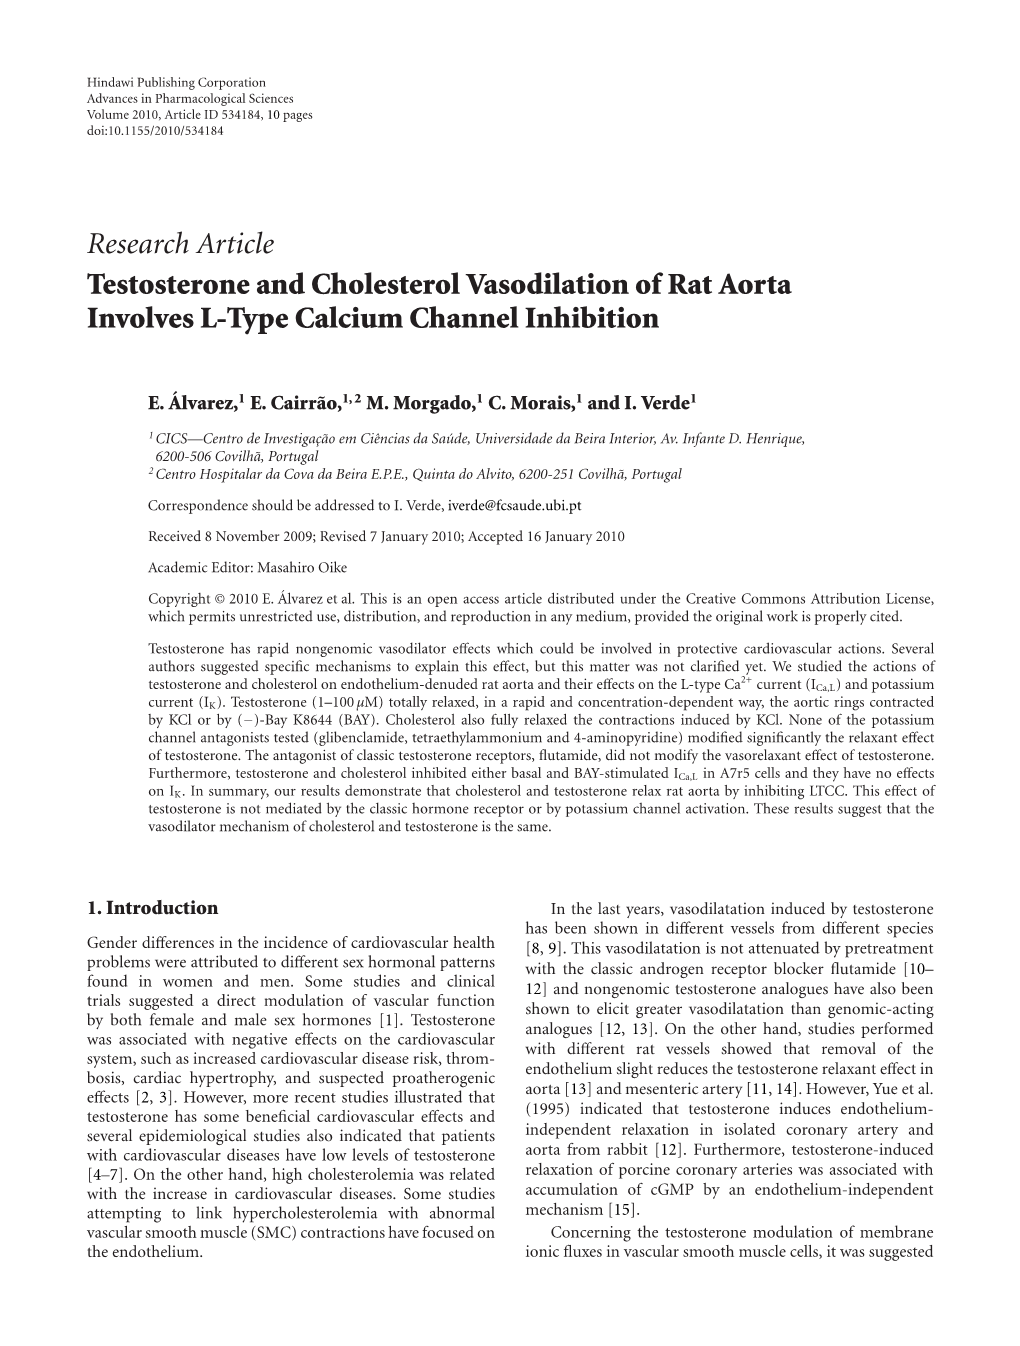 Testosterone and Cholesterol Vasodilation of Rat Aorta Involves L-Type Calcium Channel Inhibition